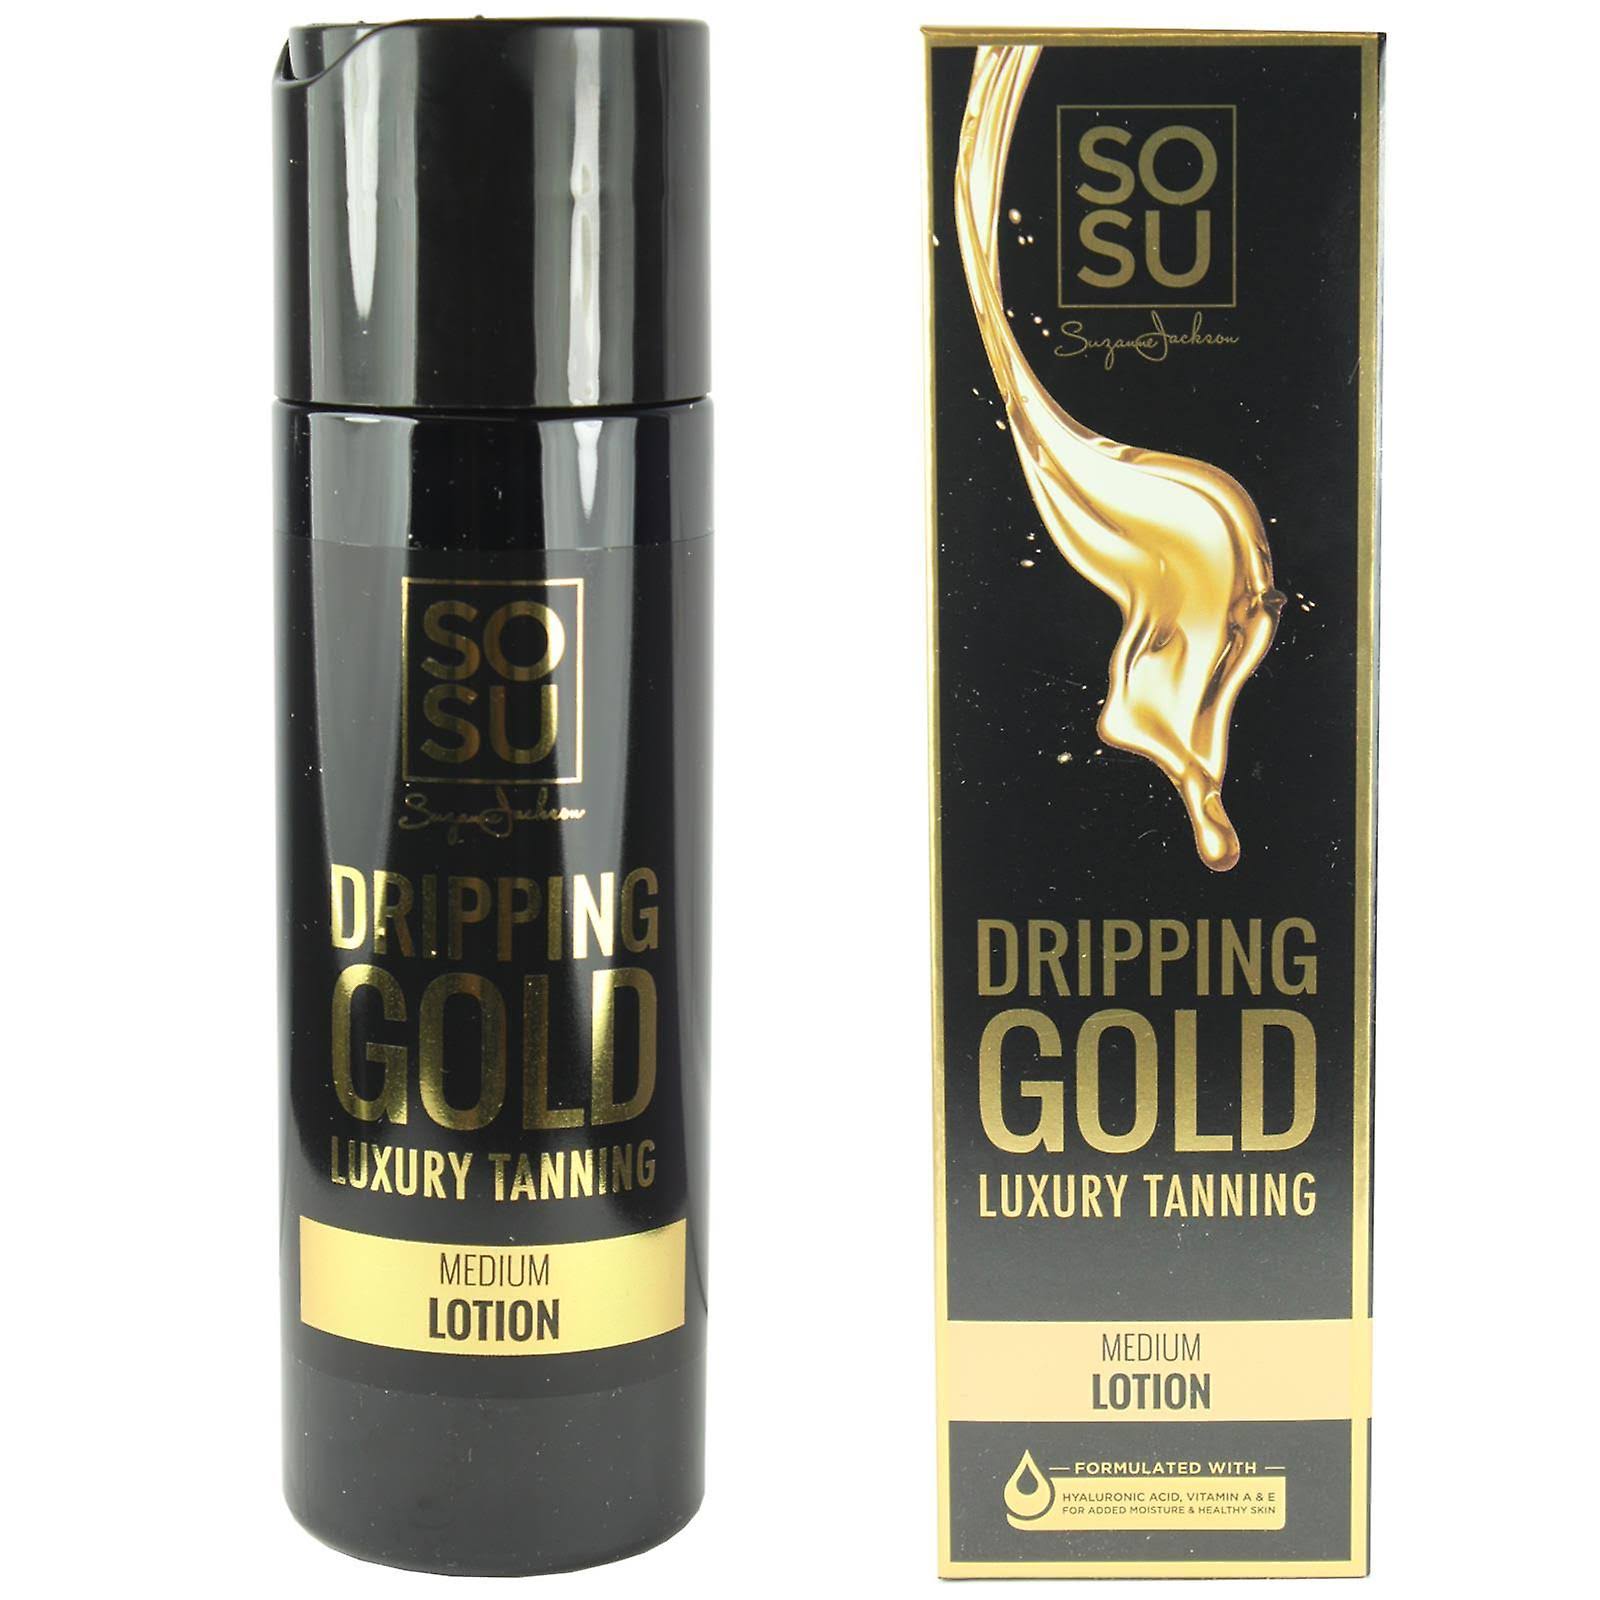 Dripping Gold - Luxury Tanning Lotion - medium